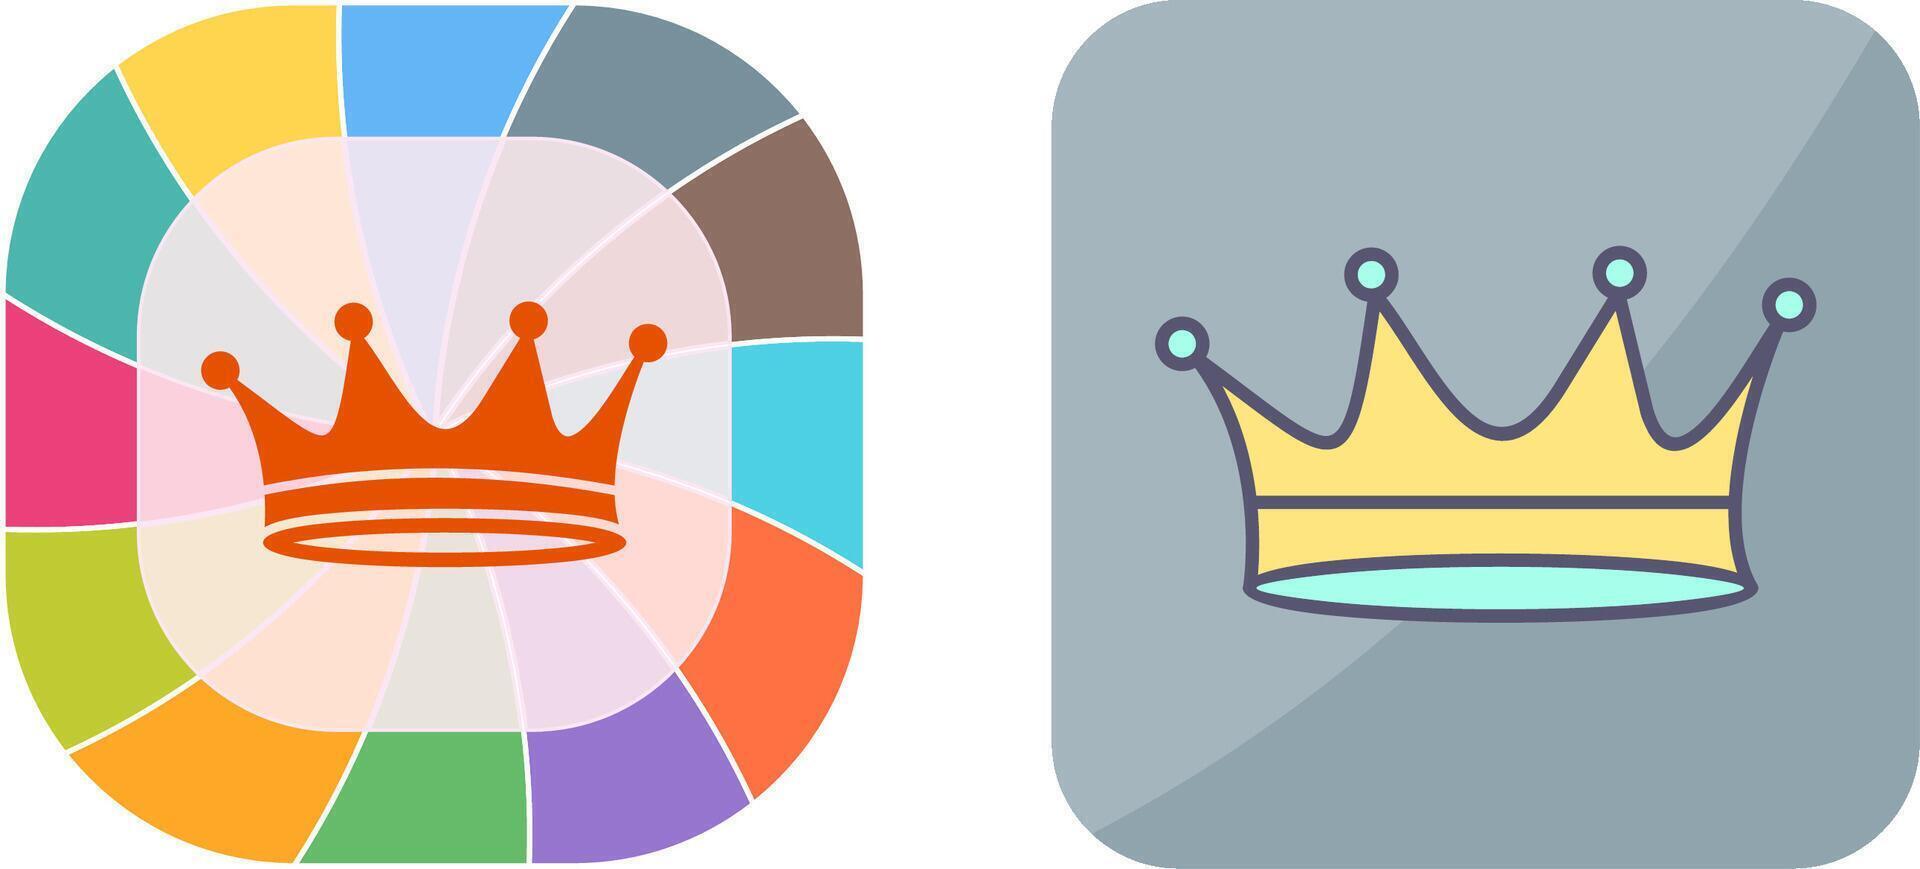 King Crown Icon Design vector